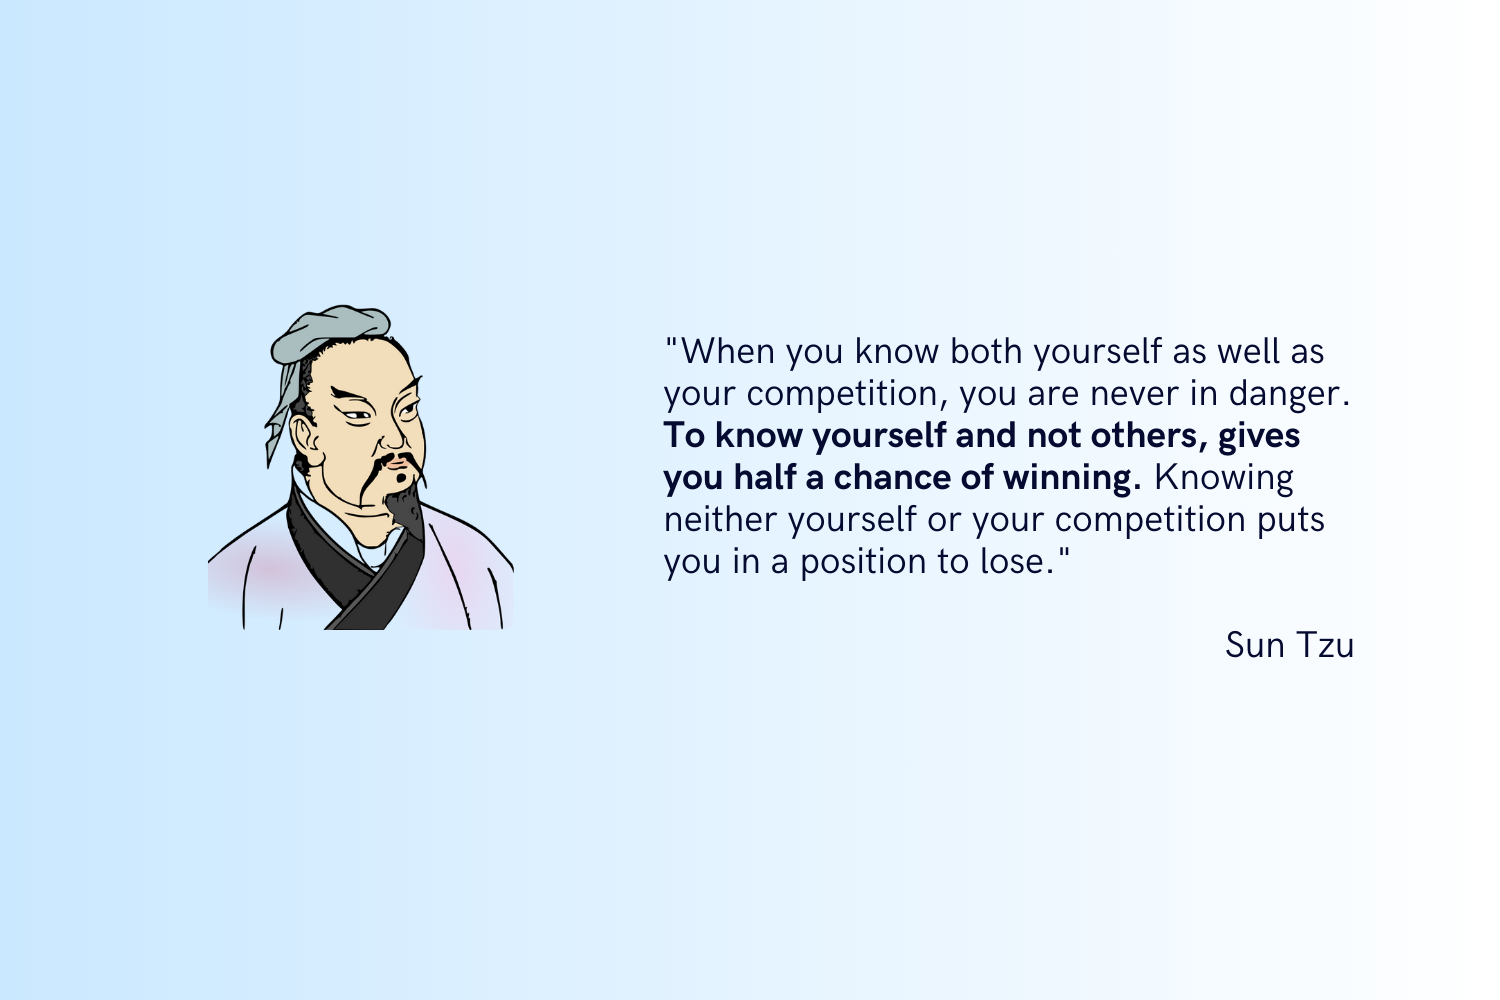 Sun Tzu on Competition